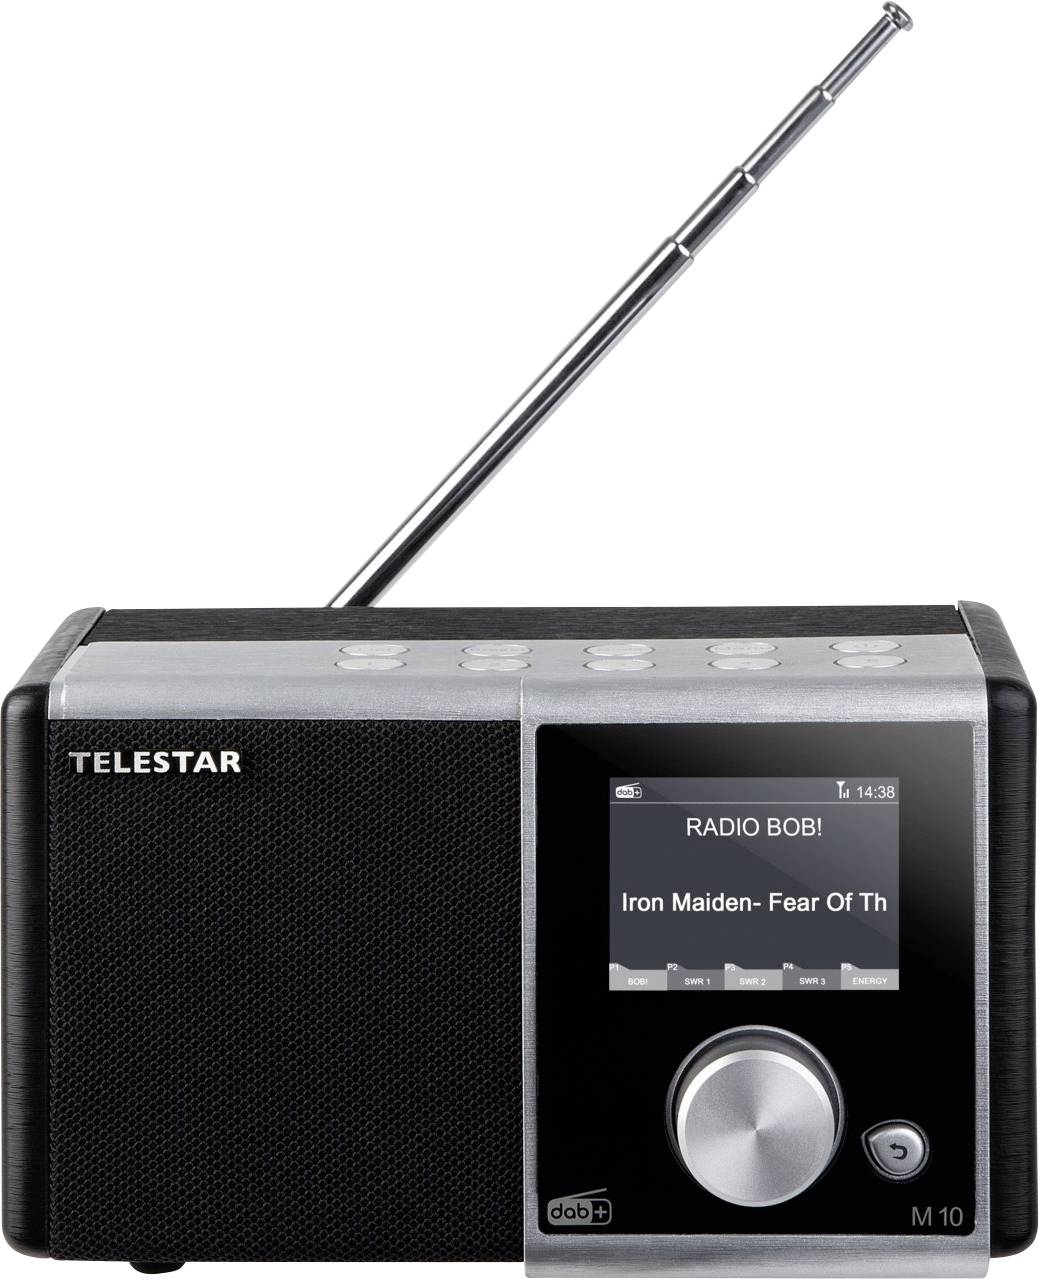 aftrekken vermomming erven Telestar DIRA M 10 Desk radio DAB+, FM AUX, USB Battery charger, Incl.  remote control, Alarm clock Black | Conrad.com